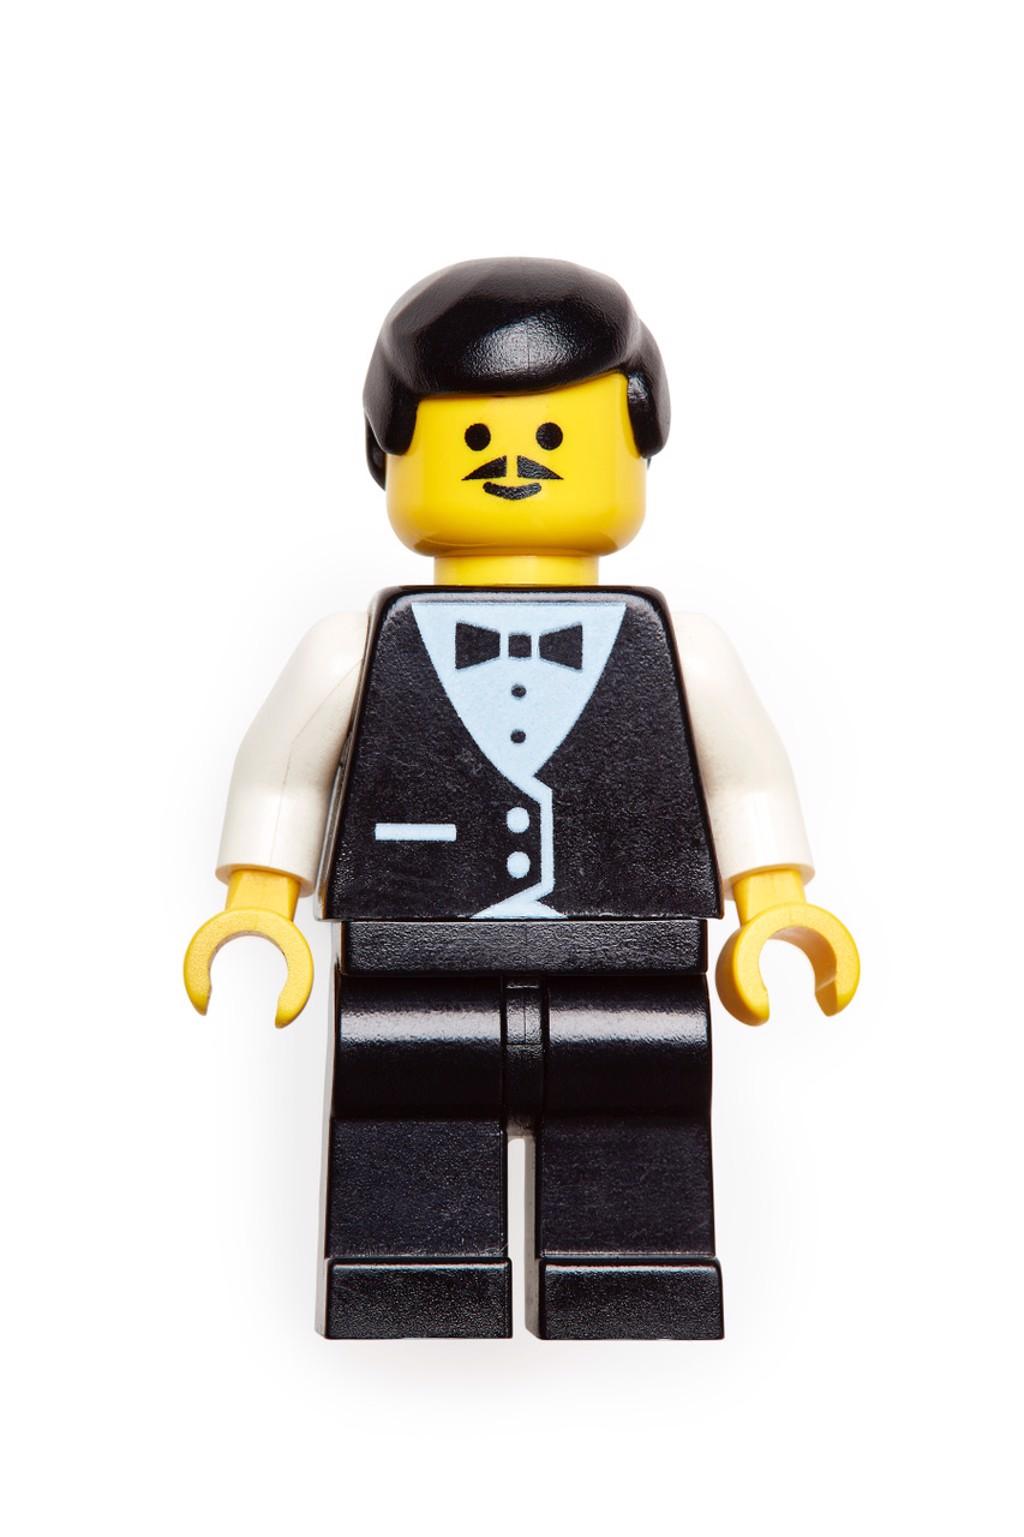 Peter Andrew Lusztyk Figurative Photograph - Lego "Garçon / Waiter" (60" x 48")